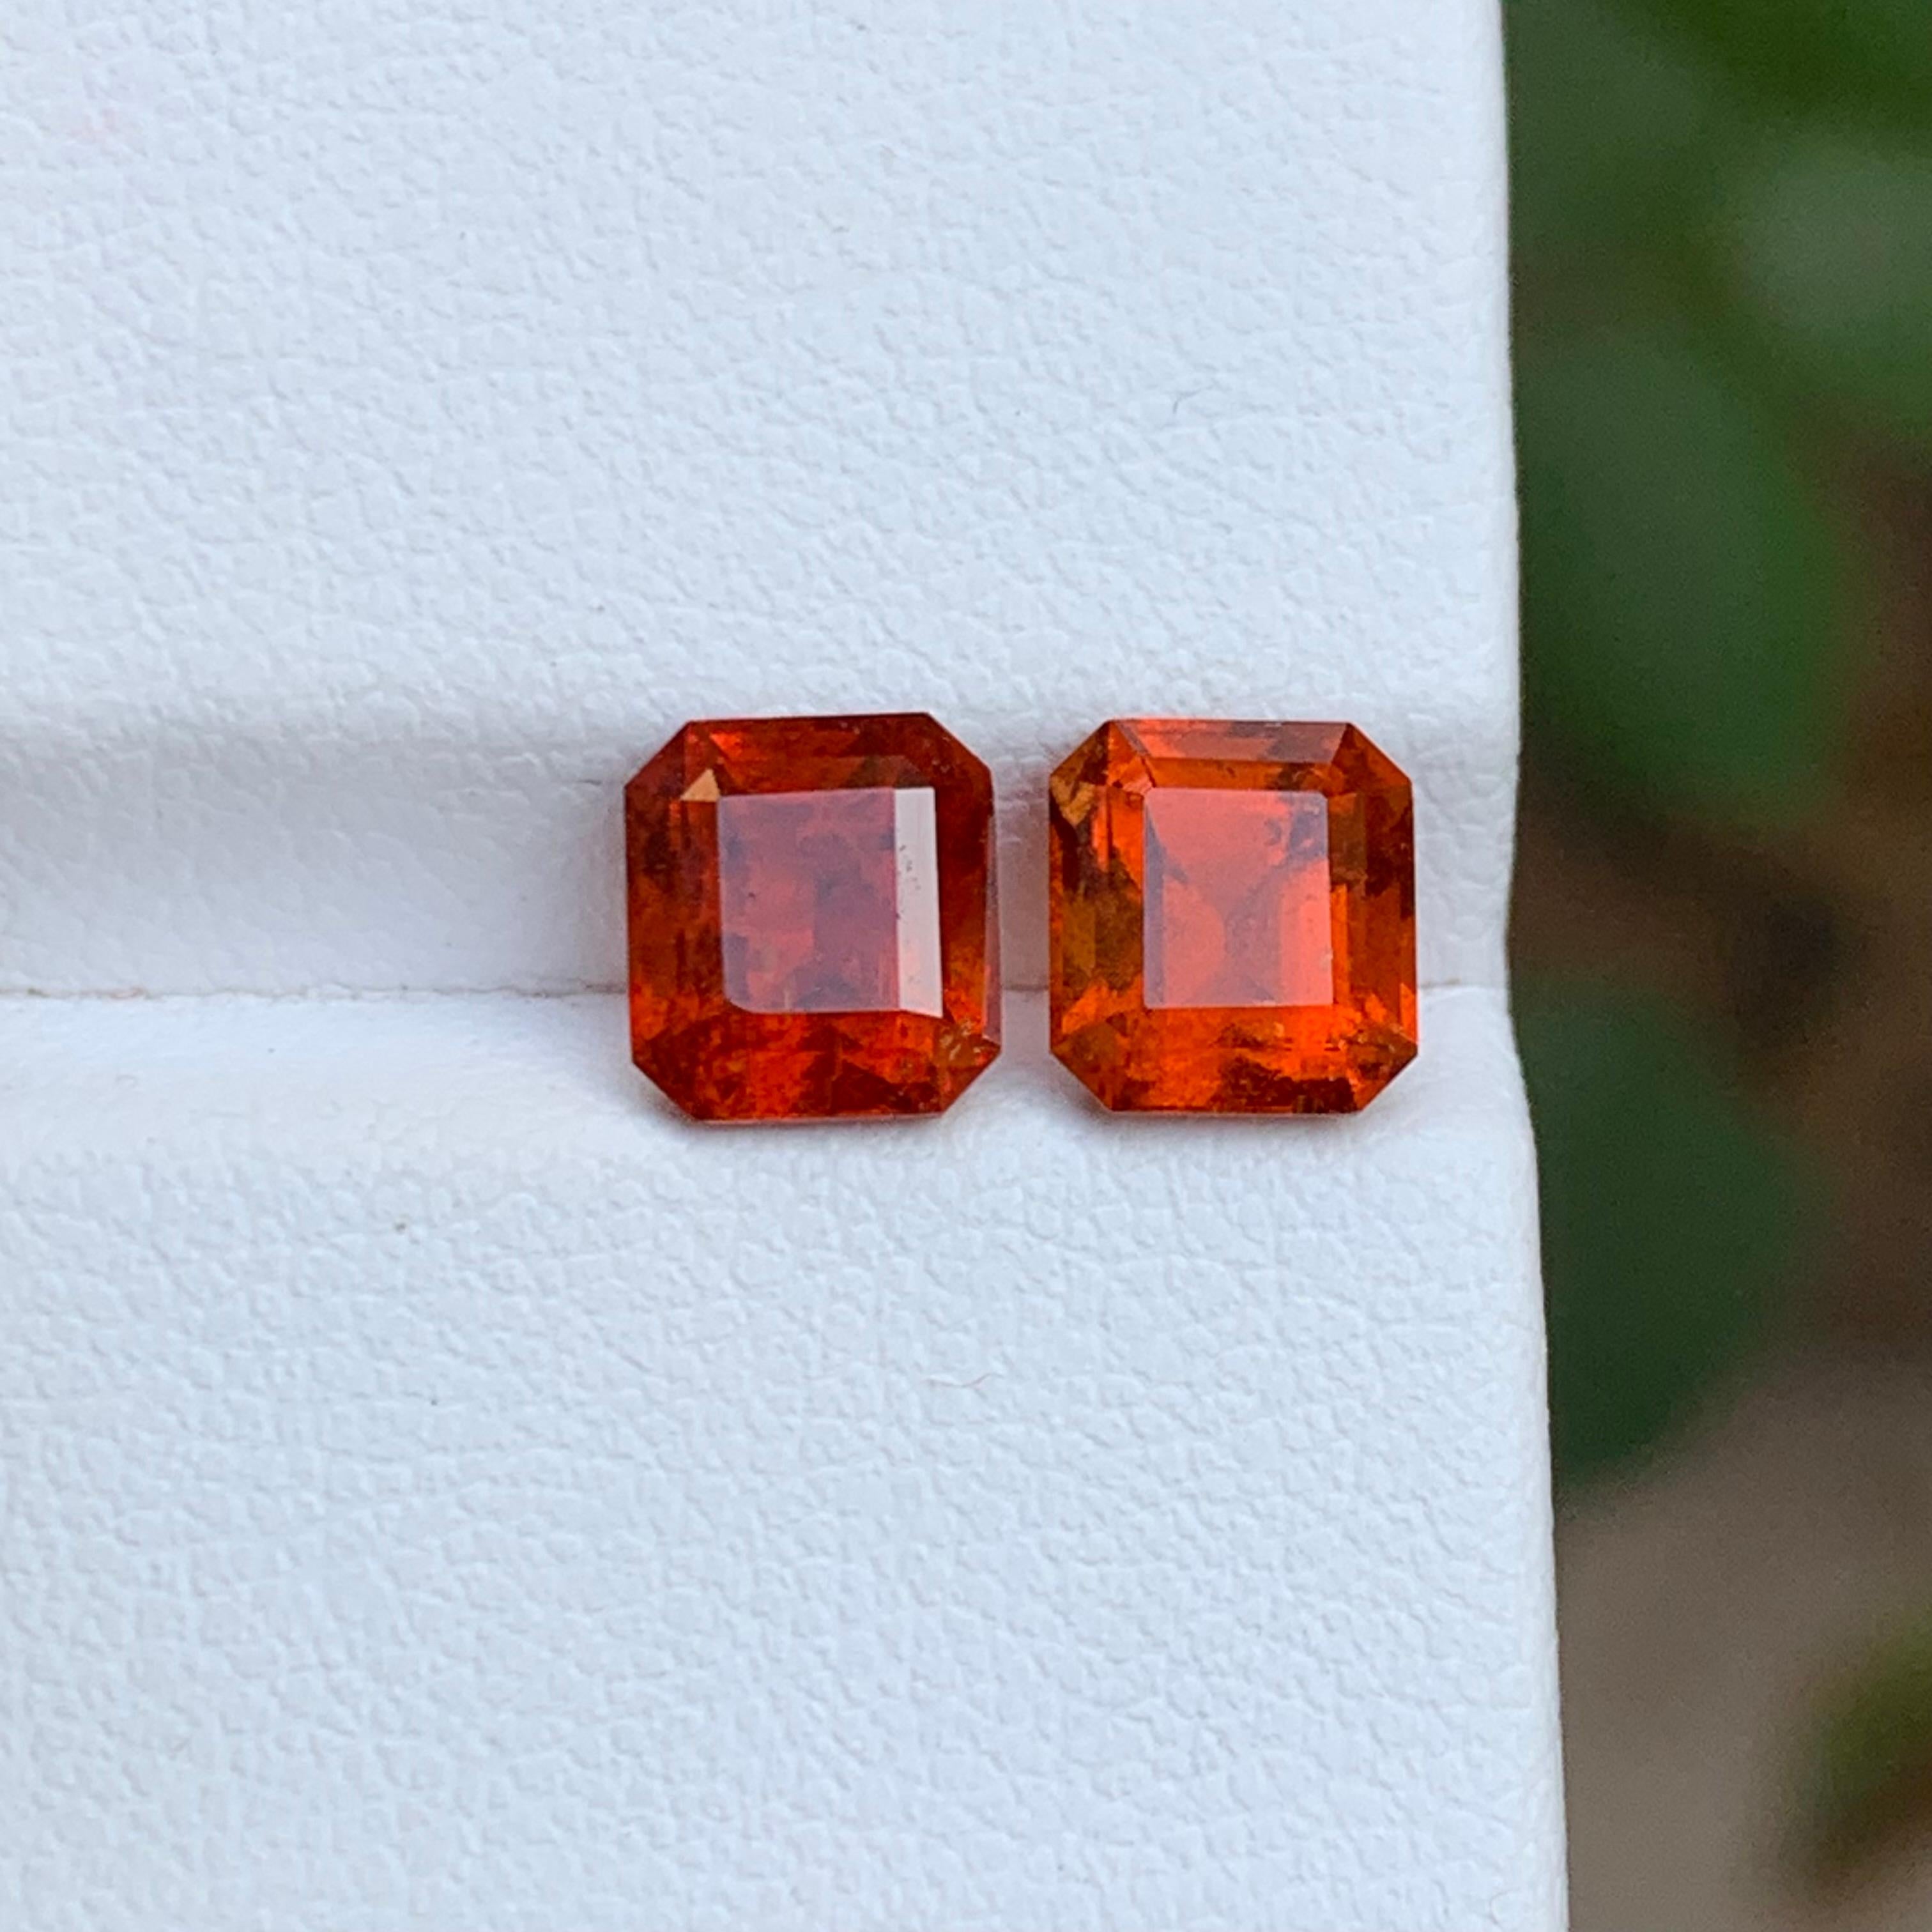 Rare Orange Hessonite Garnet Gemstones, 3.55 Ct Square Emerald Cut for Jewelry For Sale 2